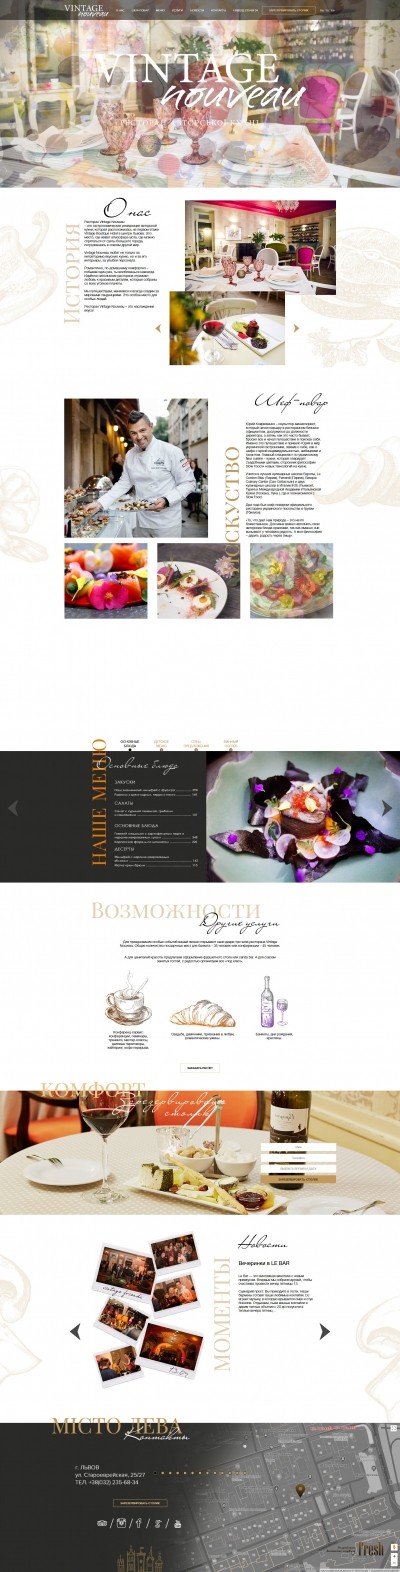 634817_screenshot_2018-07-30-restoran-avtorskoy-kuhni-v-lvove-vintage-nouveau.jpg